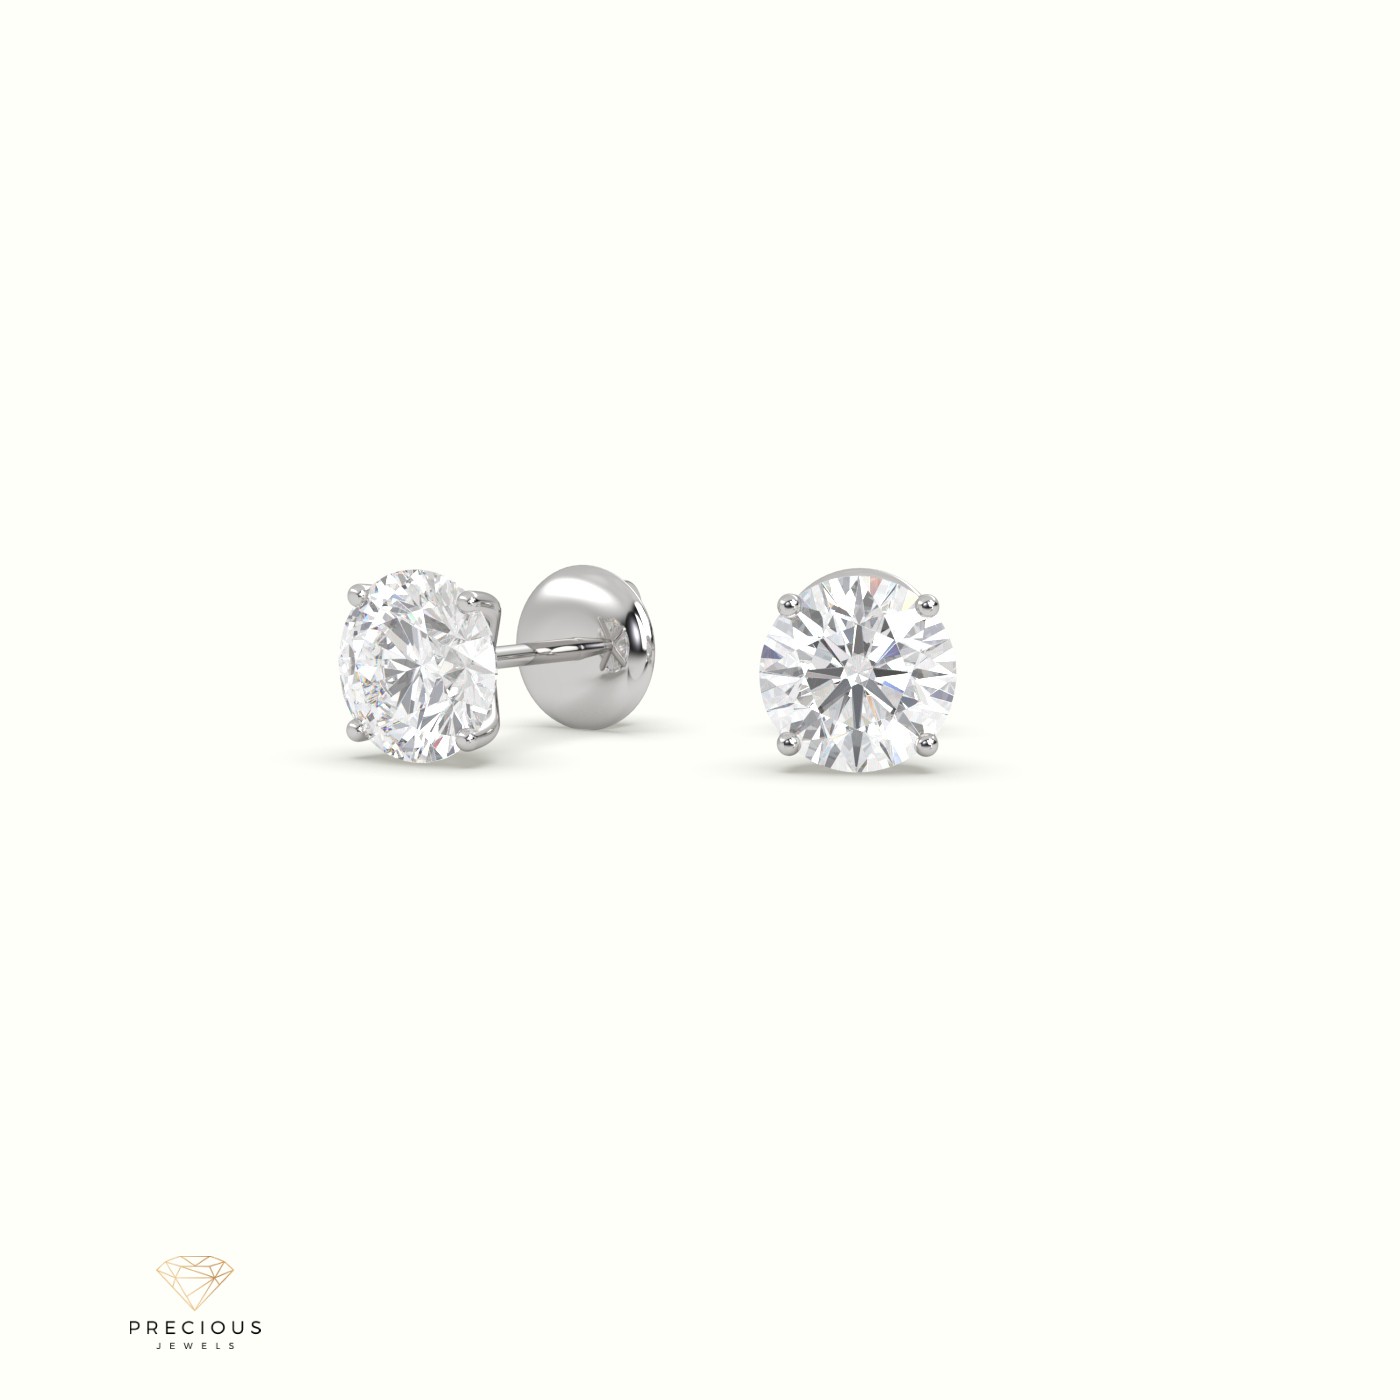 18k white gold 4 prongs round diamond studs earrings - free setting Photos & images